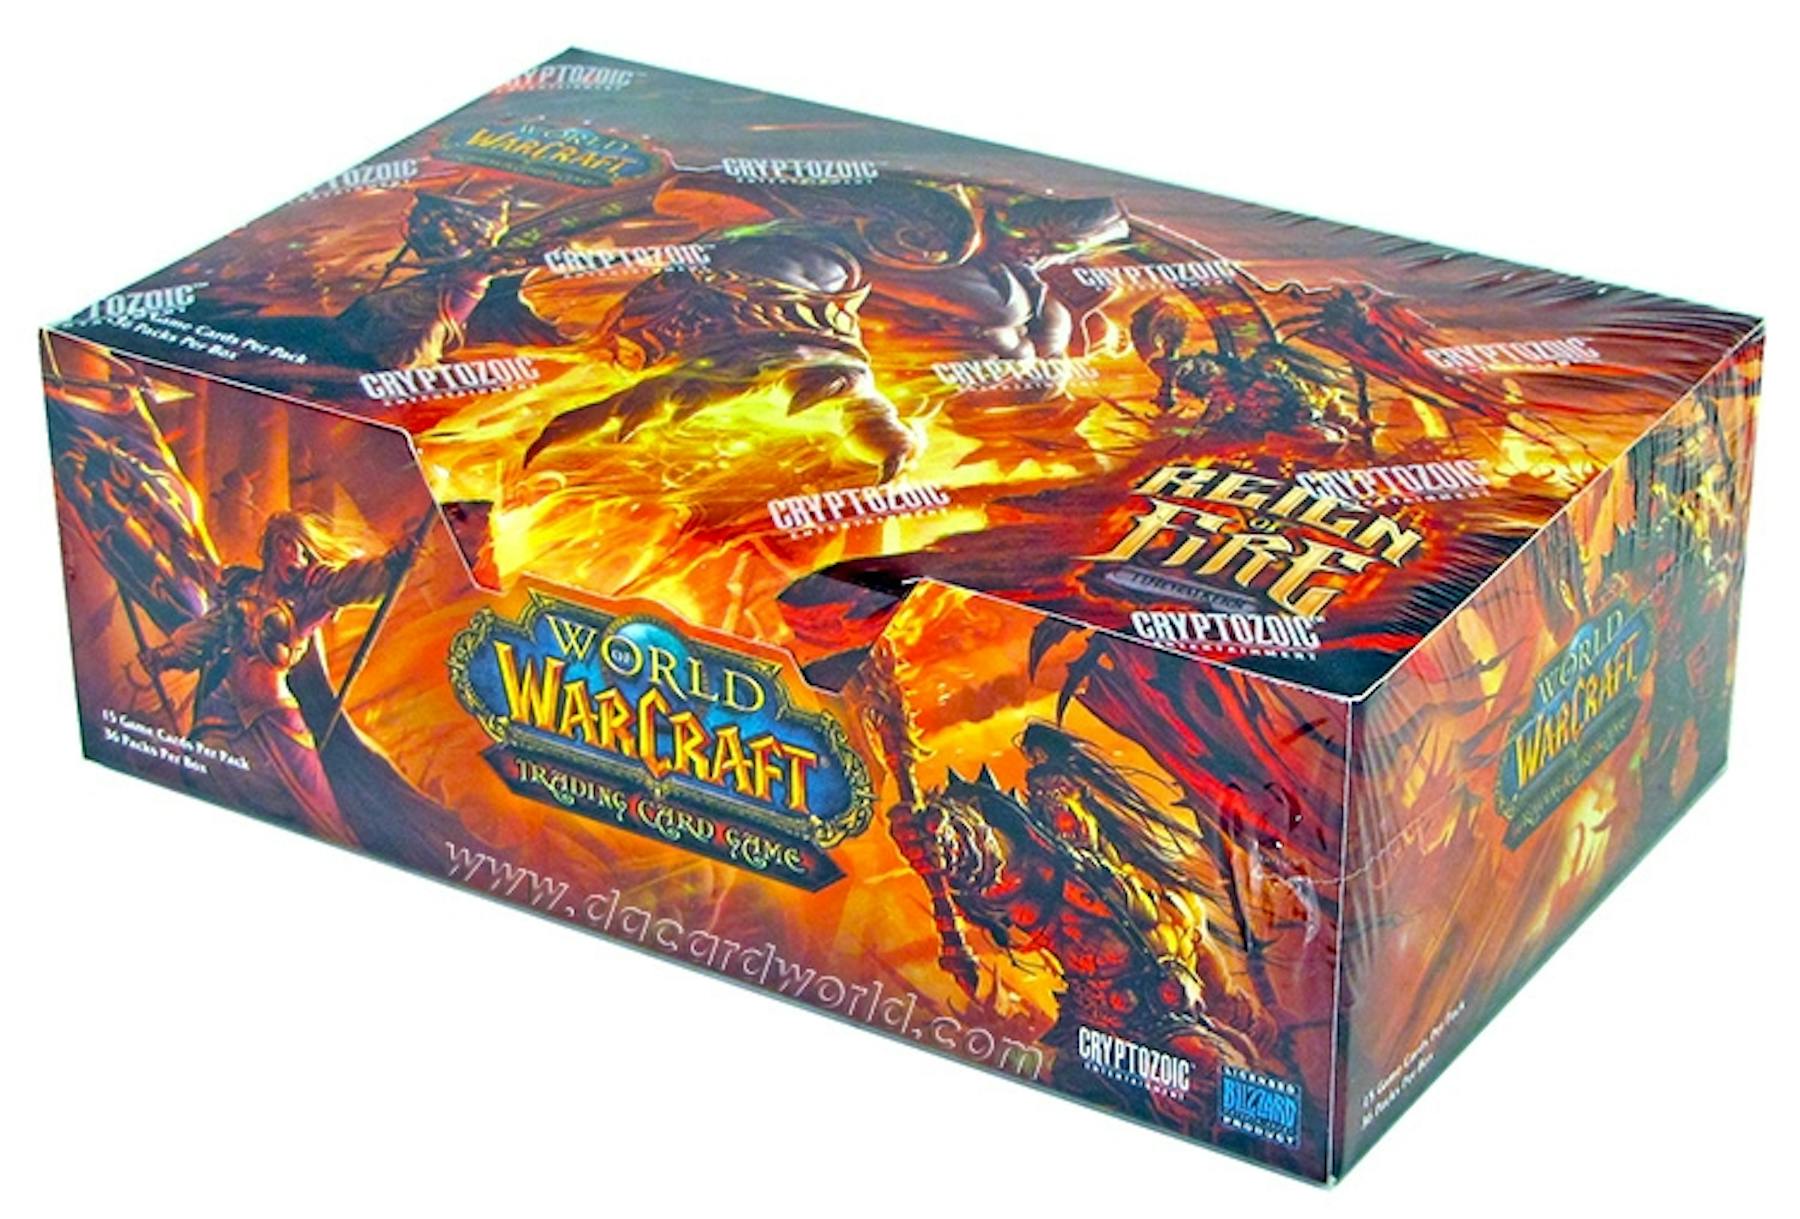 Individualiteit communicatie Tussendoortje World of Warcraft WoW Timewalkers: Reign of Fire Booster Box | DA Card World